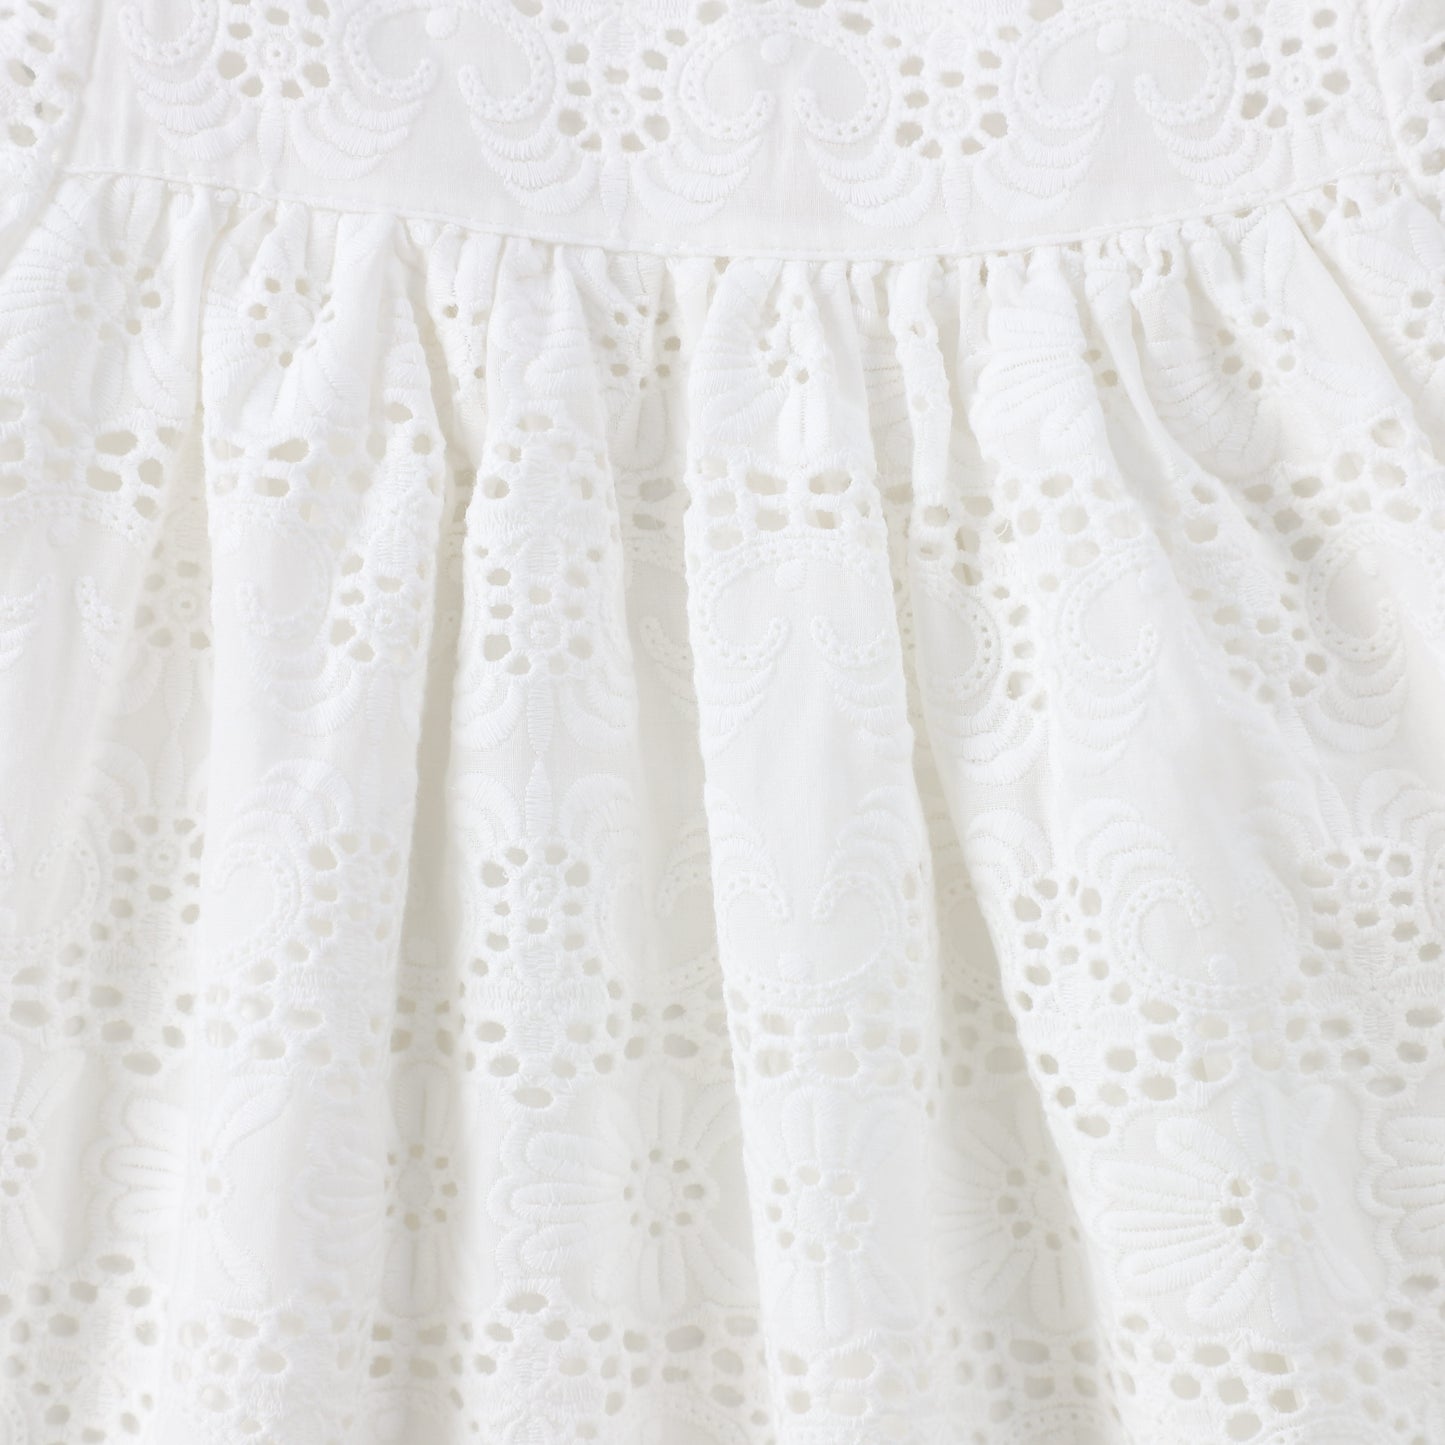 LITTLE EYELET WHITE LACE DRESS [Final Sale]